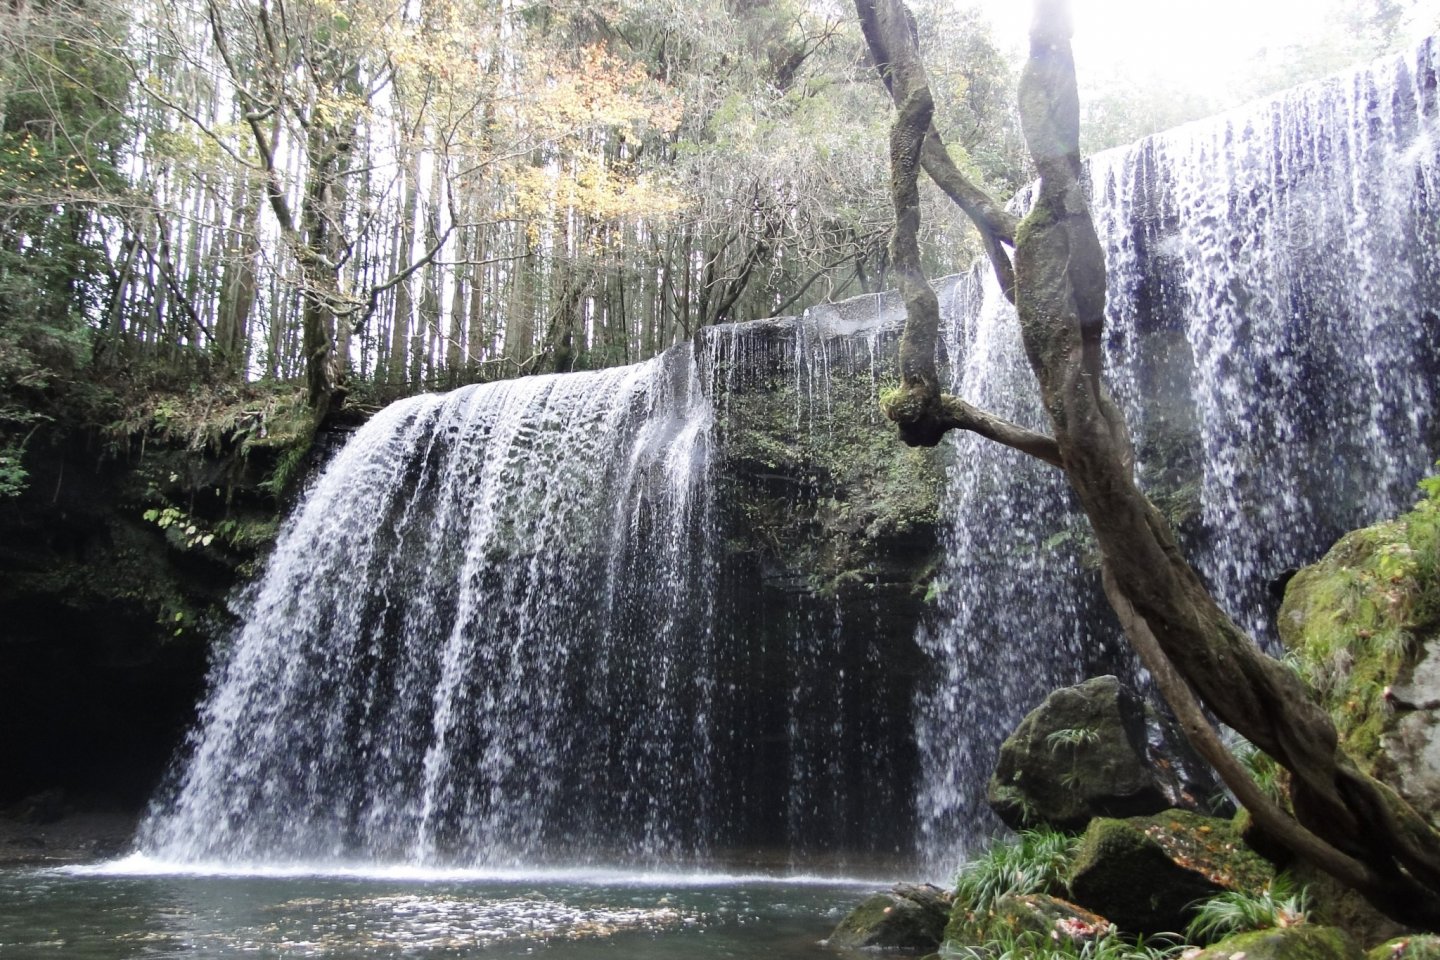 Nabegataki is one of Kyushu's most stunning waterfalls